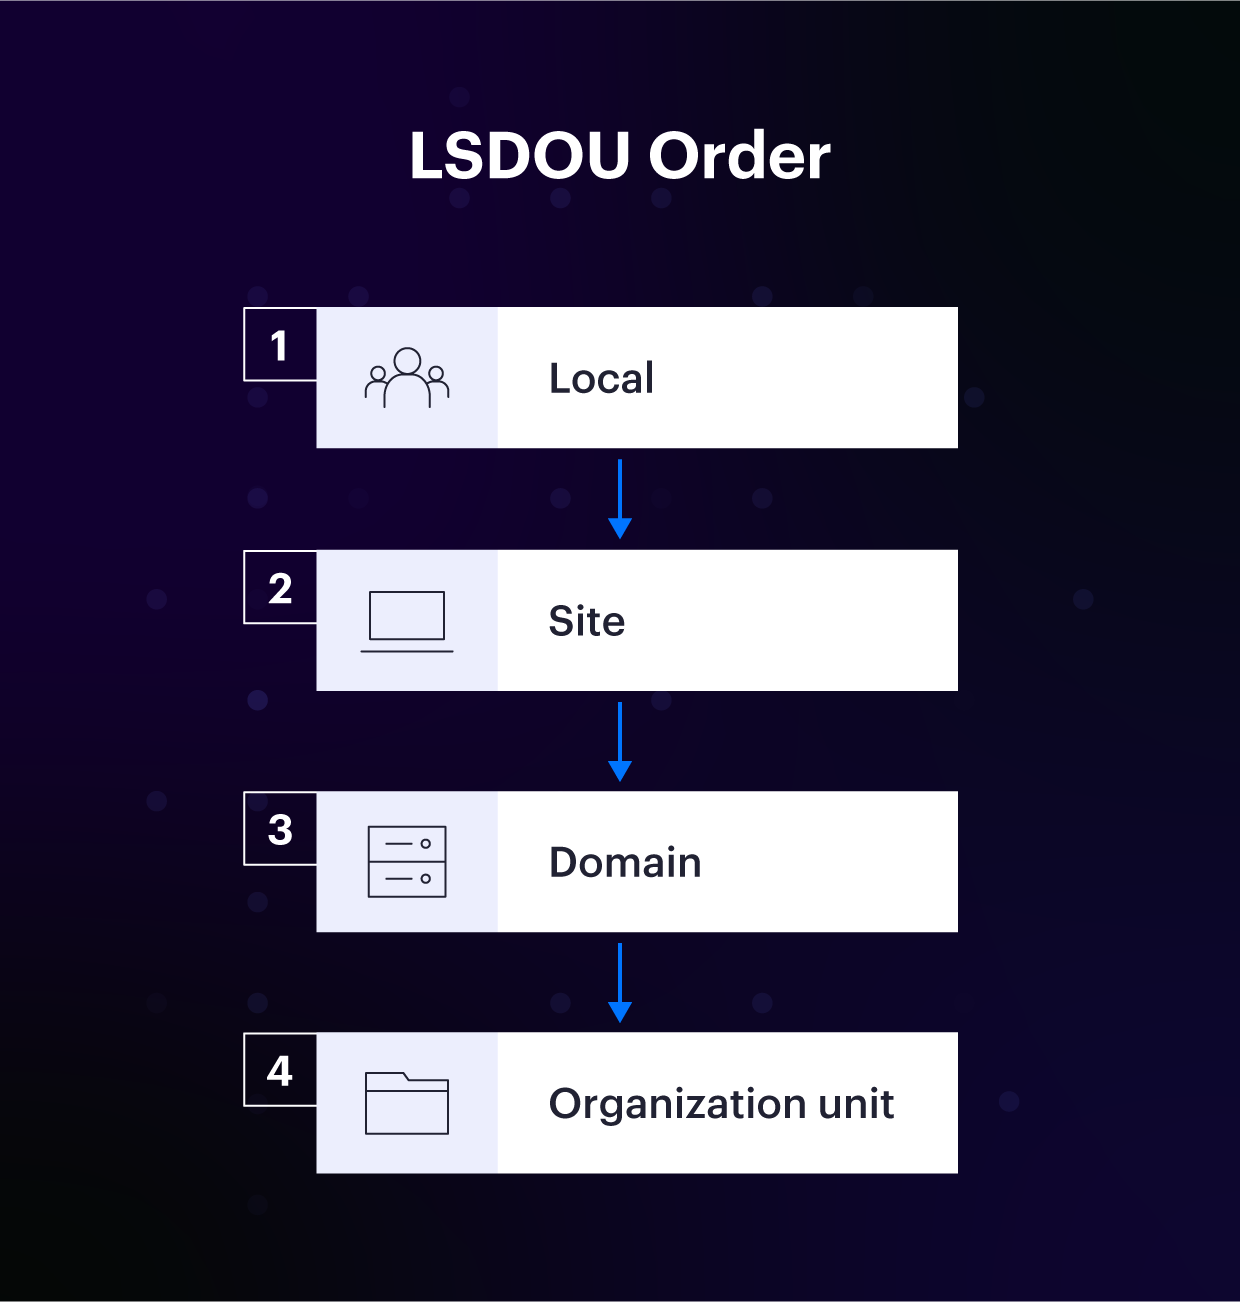 GPO processing order: Local > site > domain > organization unit